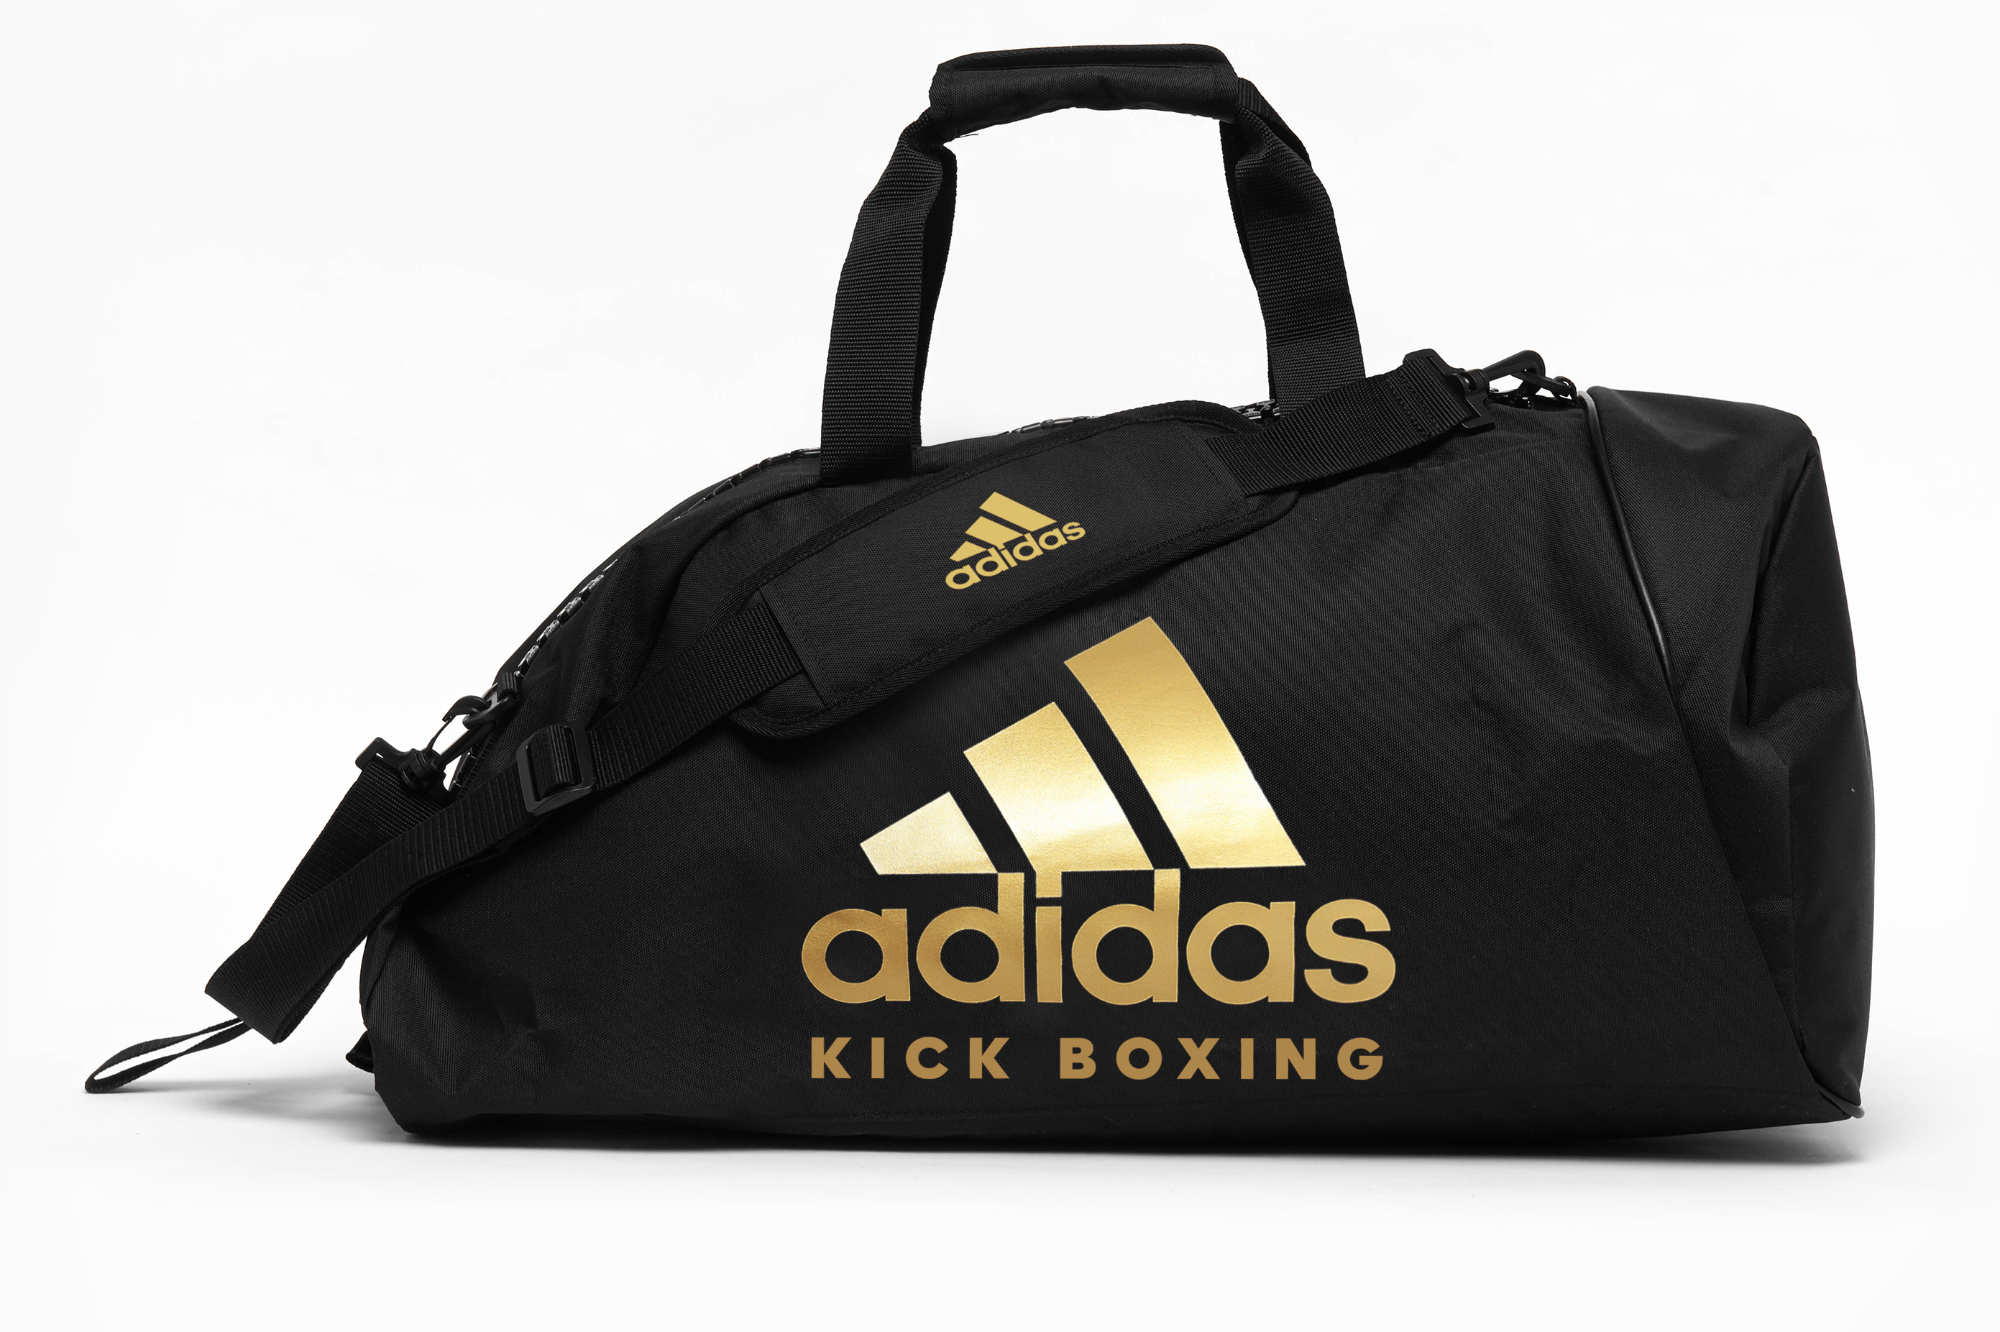 adidas 2in1 Bag Kickboxing Nylon adiACC052KB, black/gold